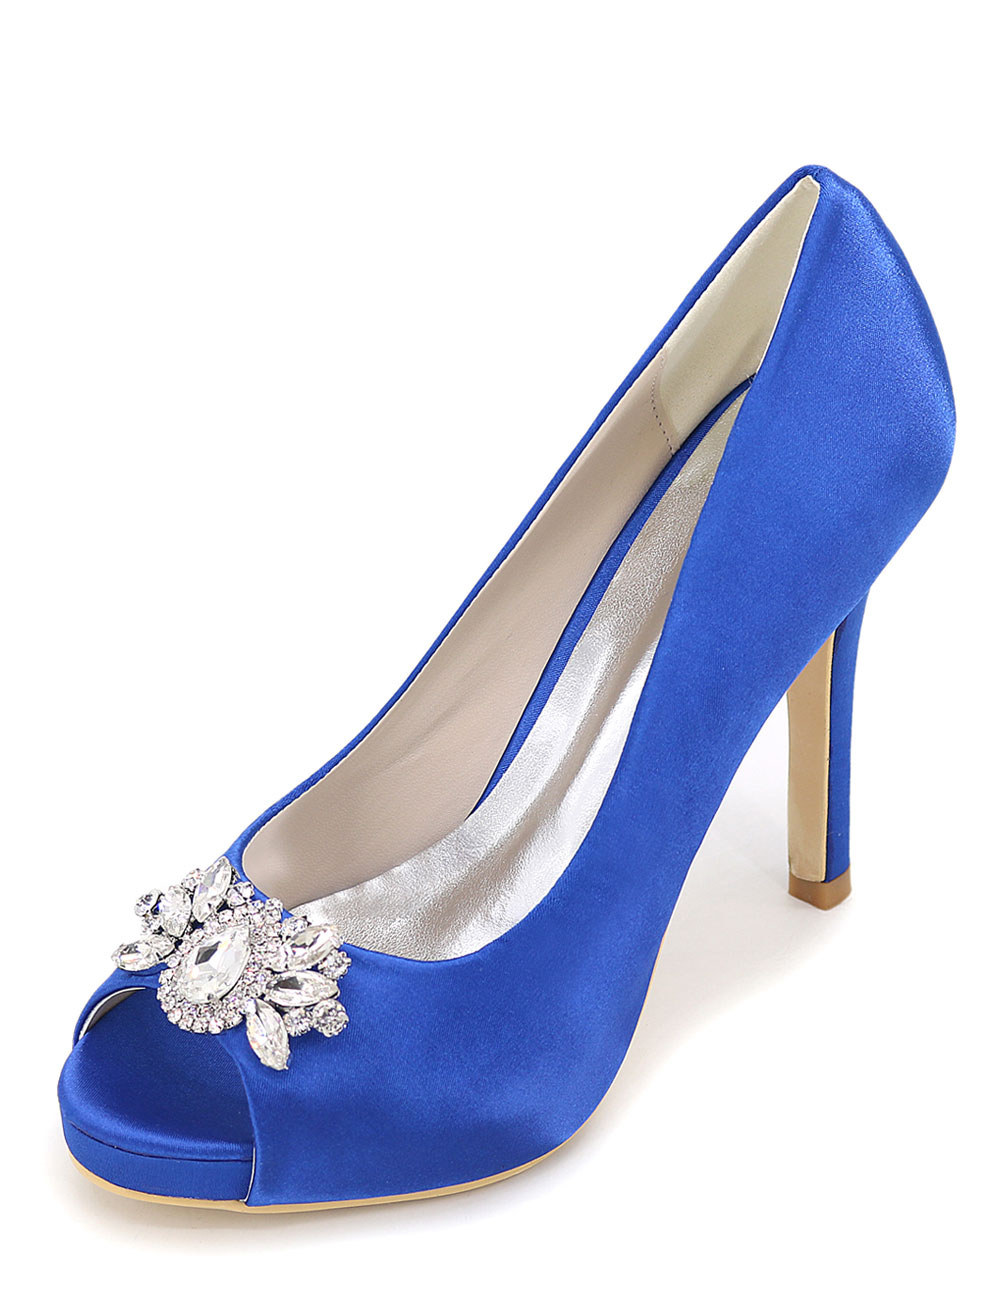 blue heels with rhinestones